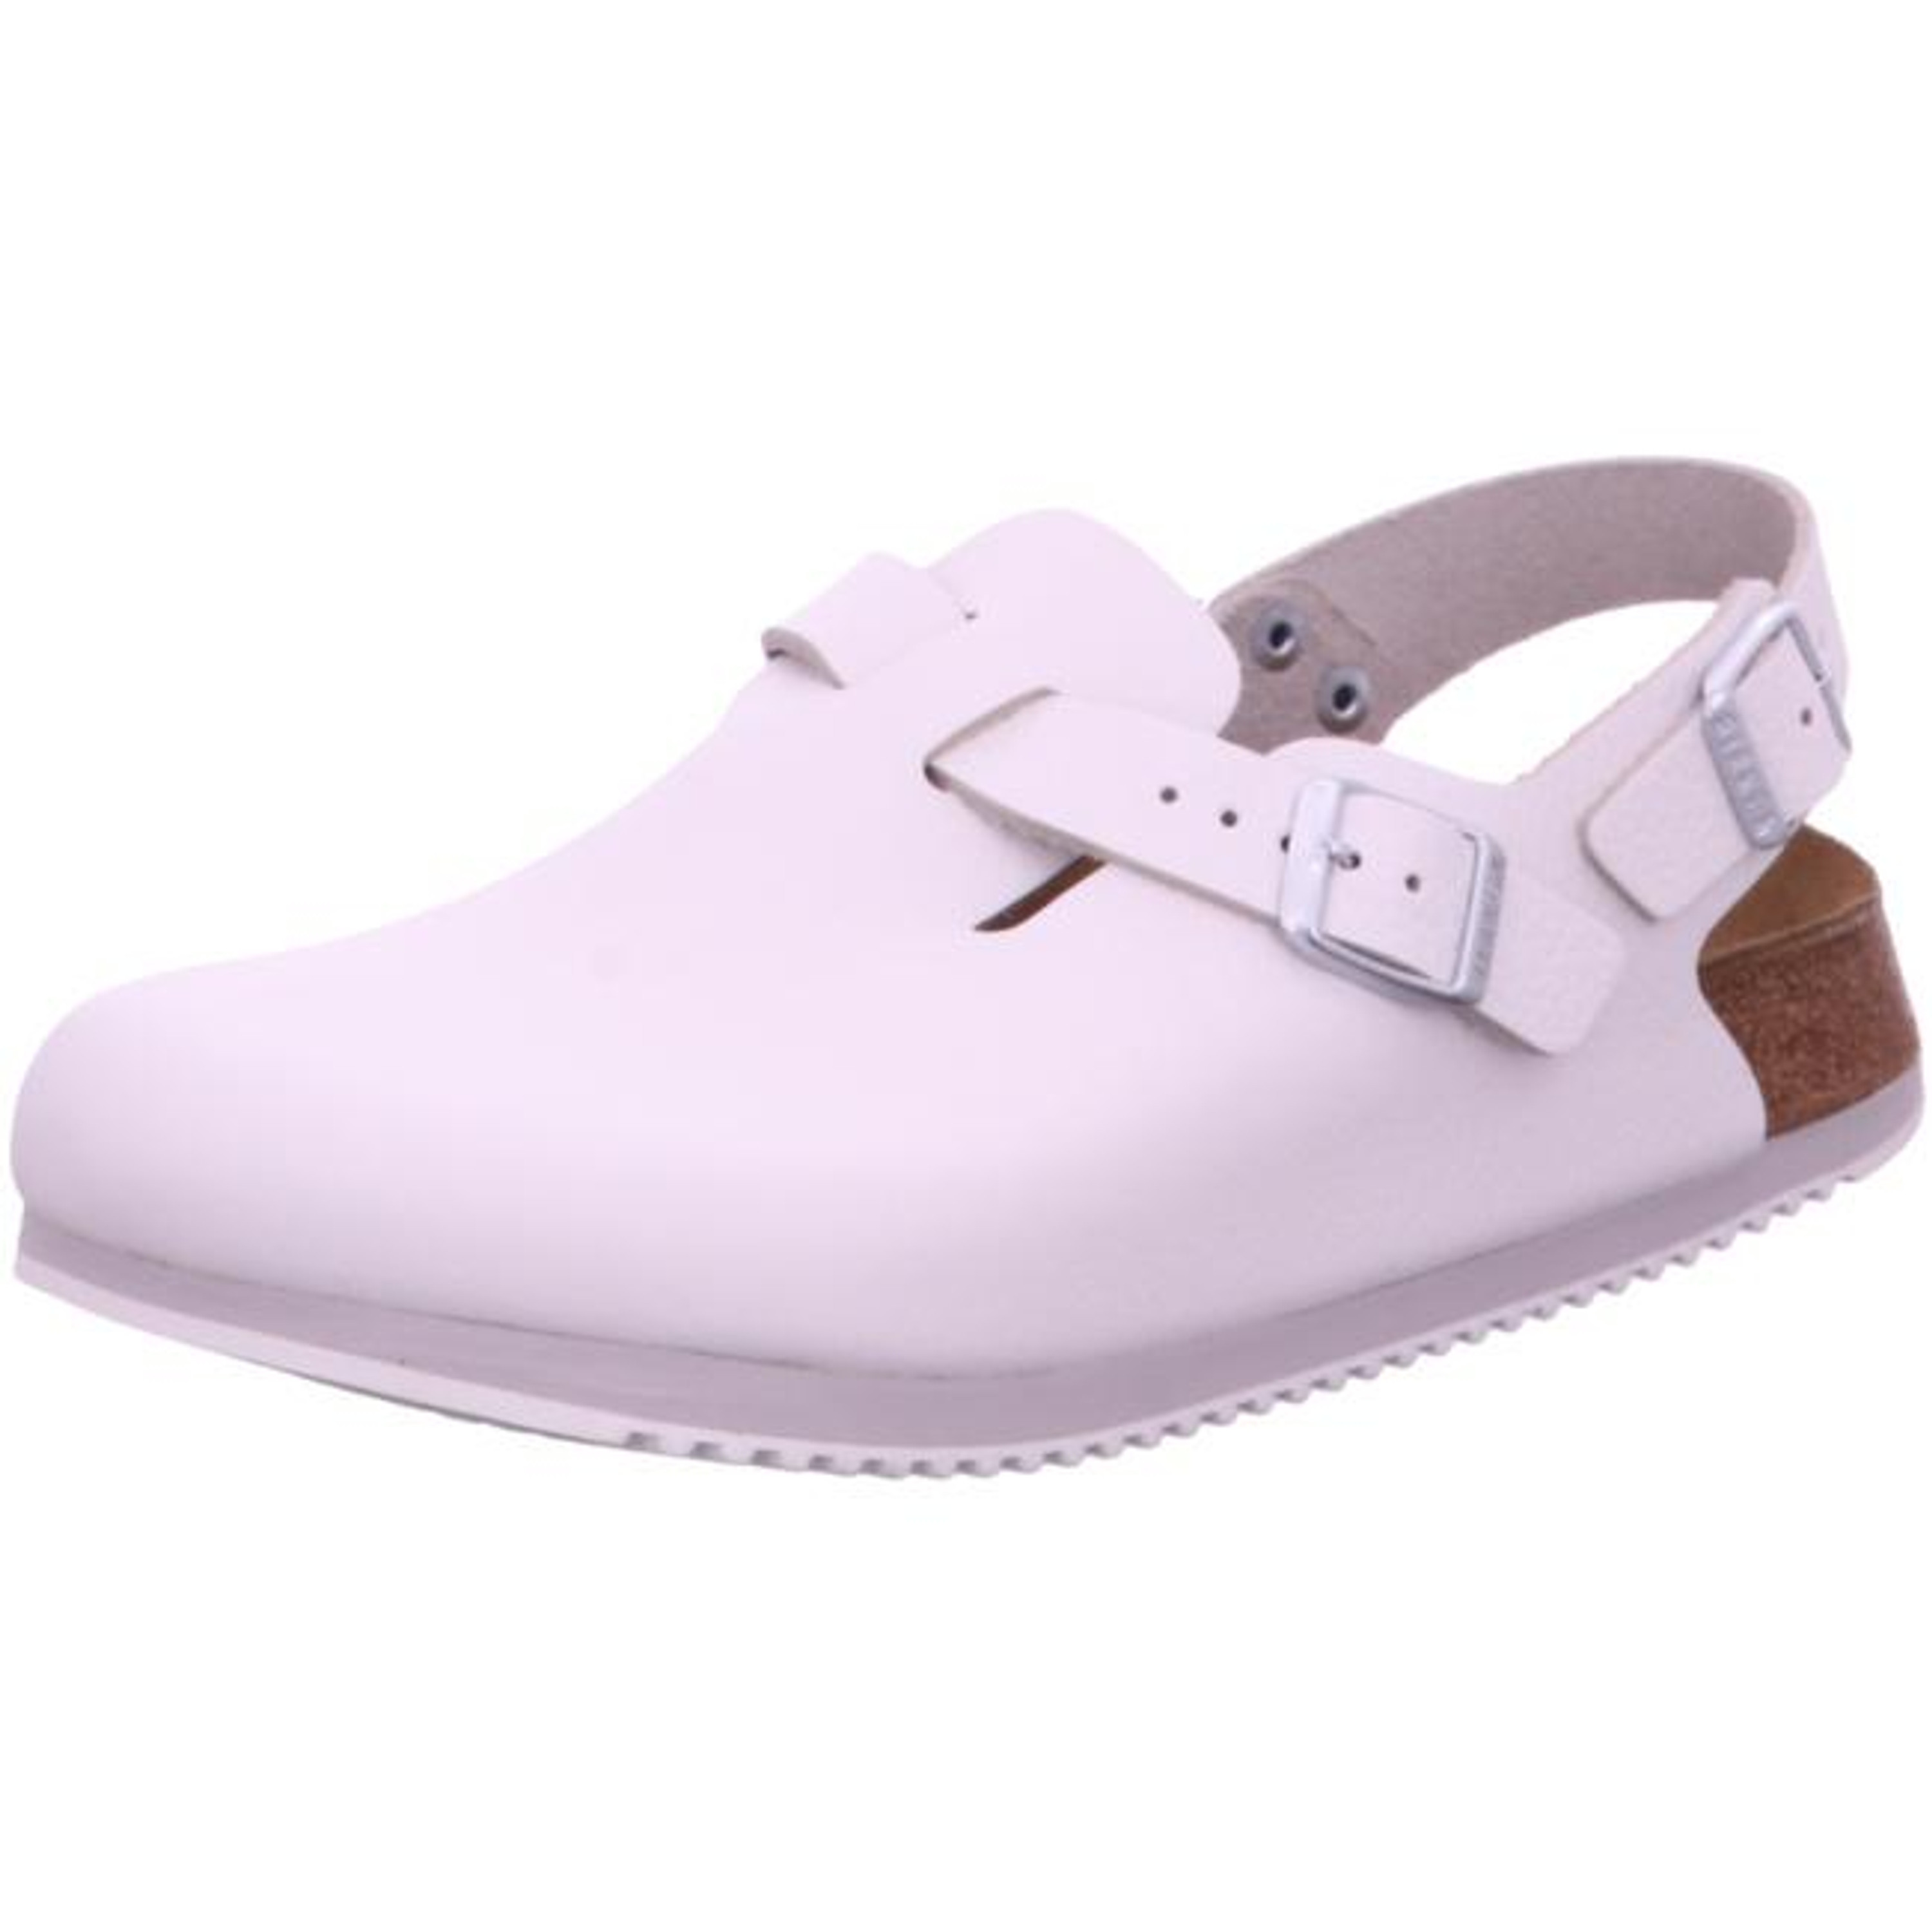 Birkenstock Tokio Tokyo Leather Work Shoes Clogs Super Grip Sandals White Regula Ebay